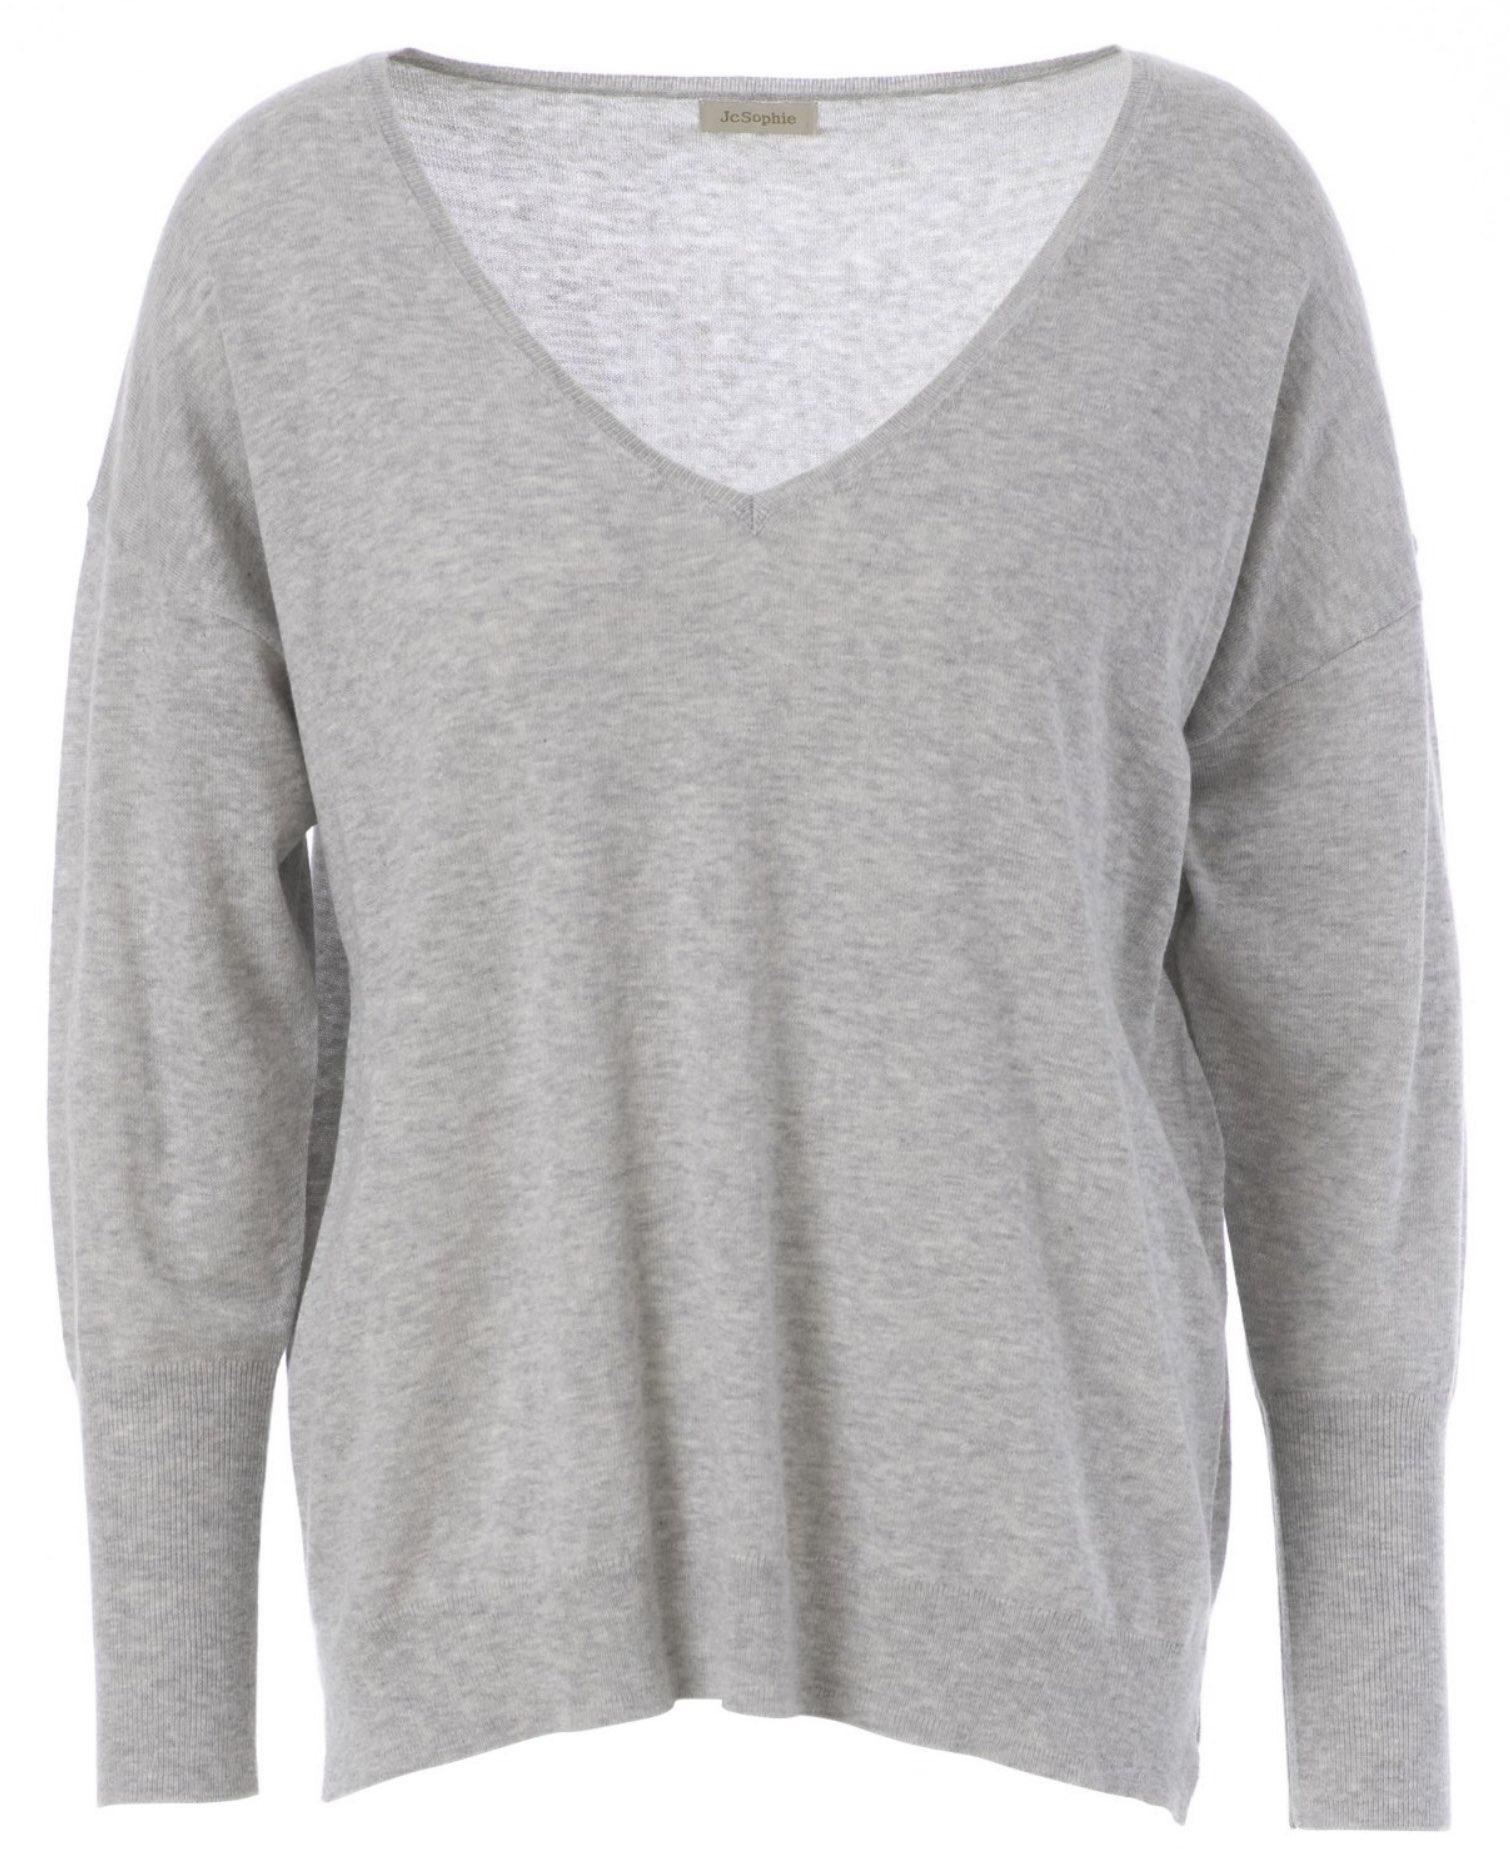 JcSophie C3119 Sweater Clio Grey Melange